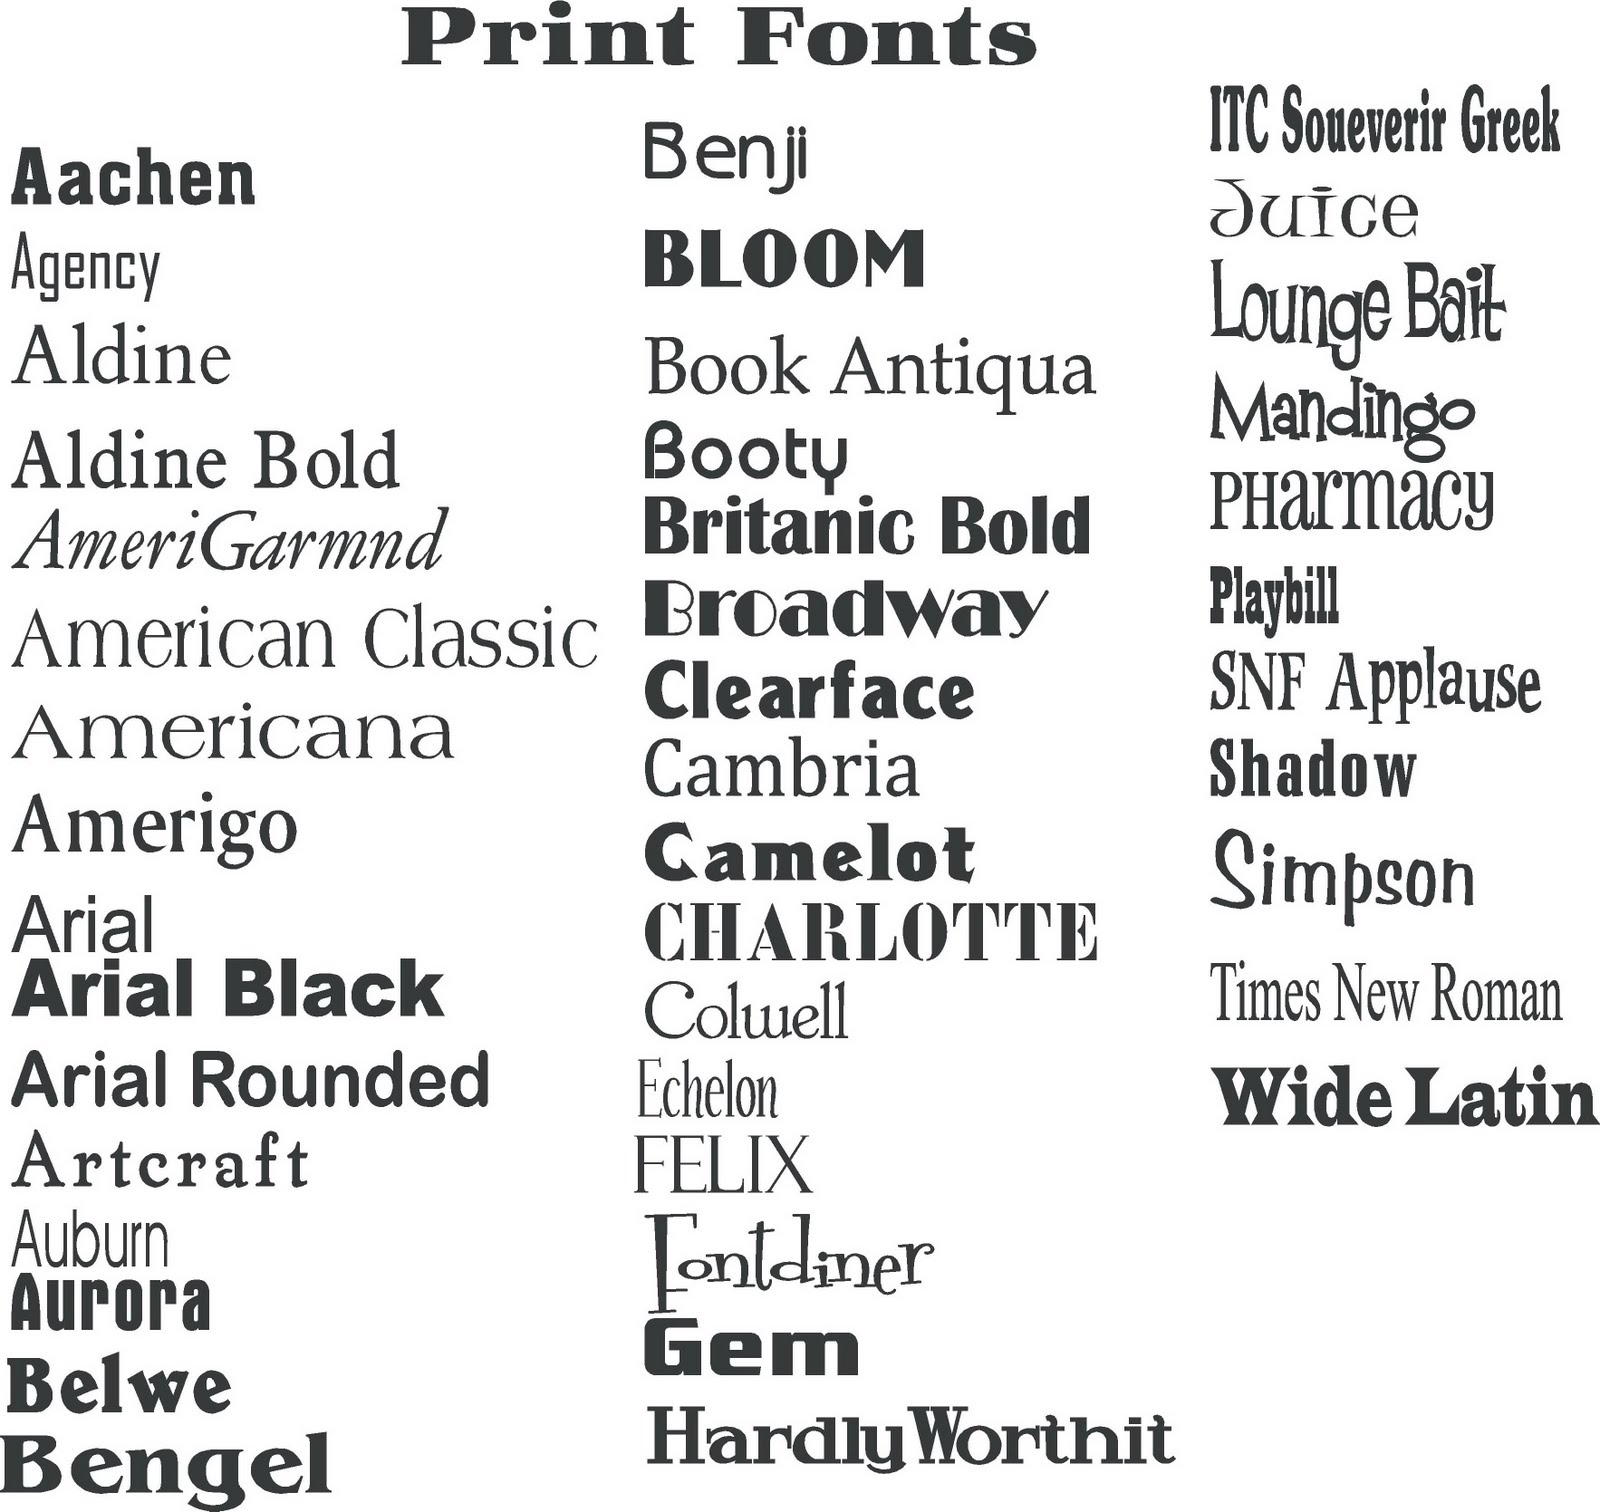 Simply Beautiful: Print Fonts